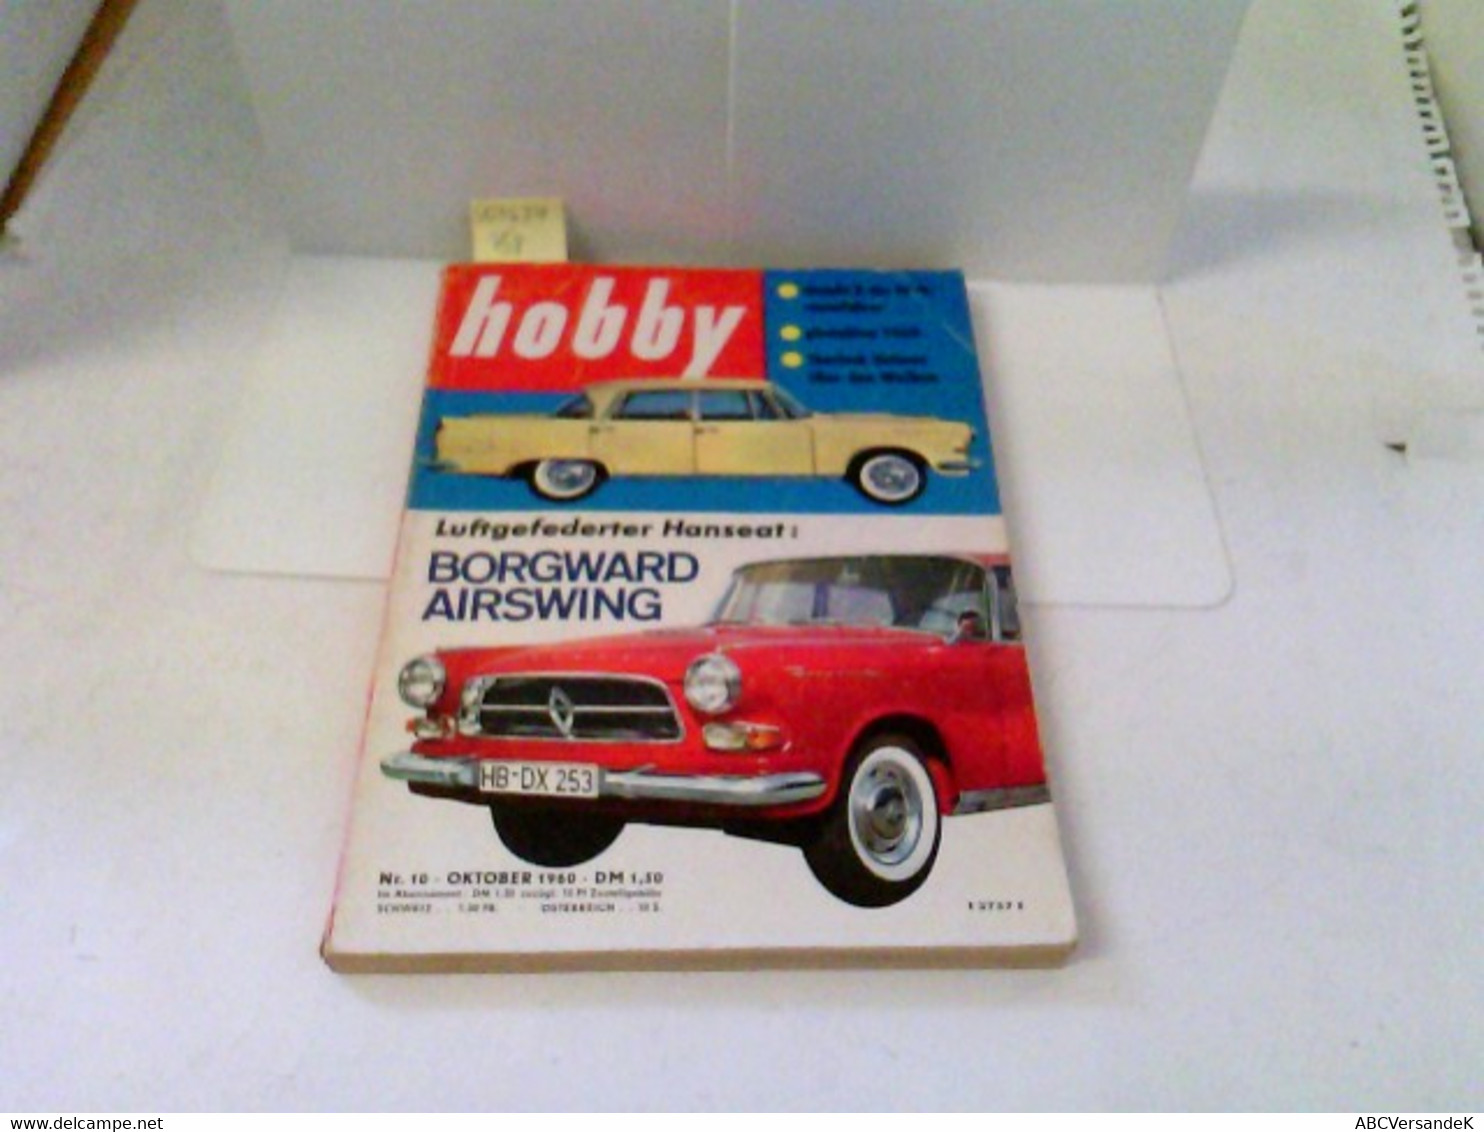 Hobby - Das Magazin Der Technik - Heft 1960/10 - Luftgefederter Hanseat: Borgward Airswing U.v.m. - Tecnica